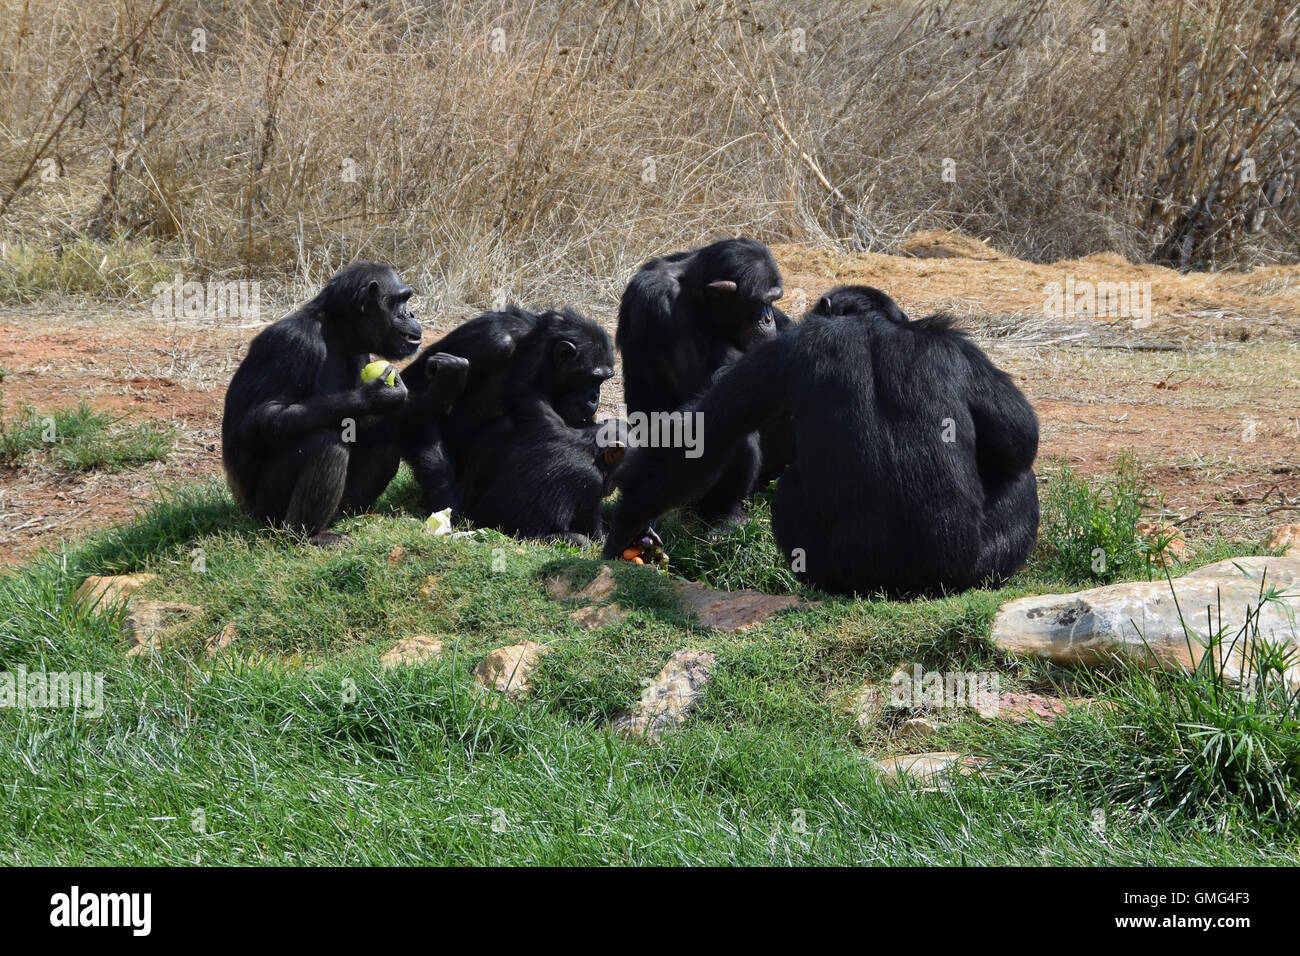 Group of chimpanzees feeding on vegetables. Wild animals sitting on grass. Stock Photo